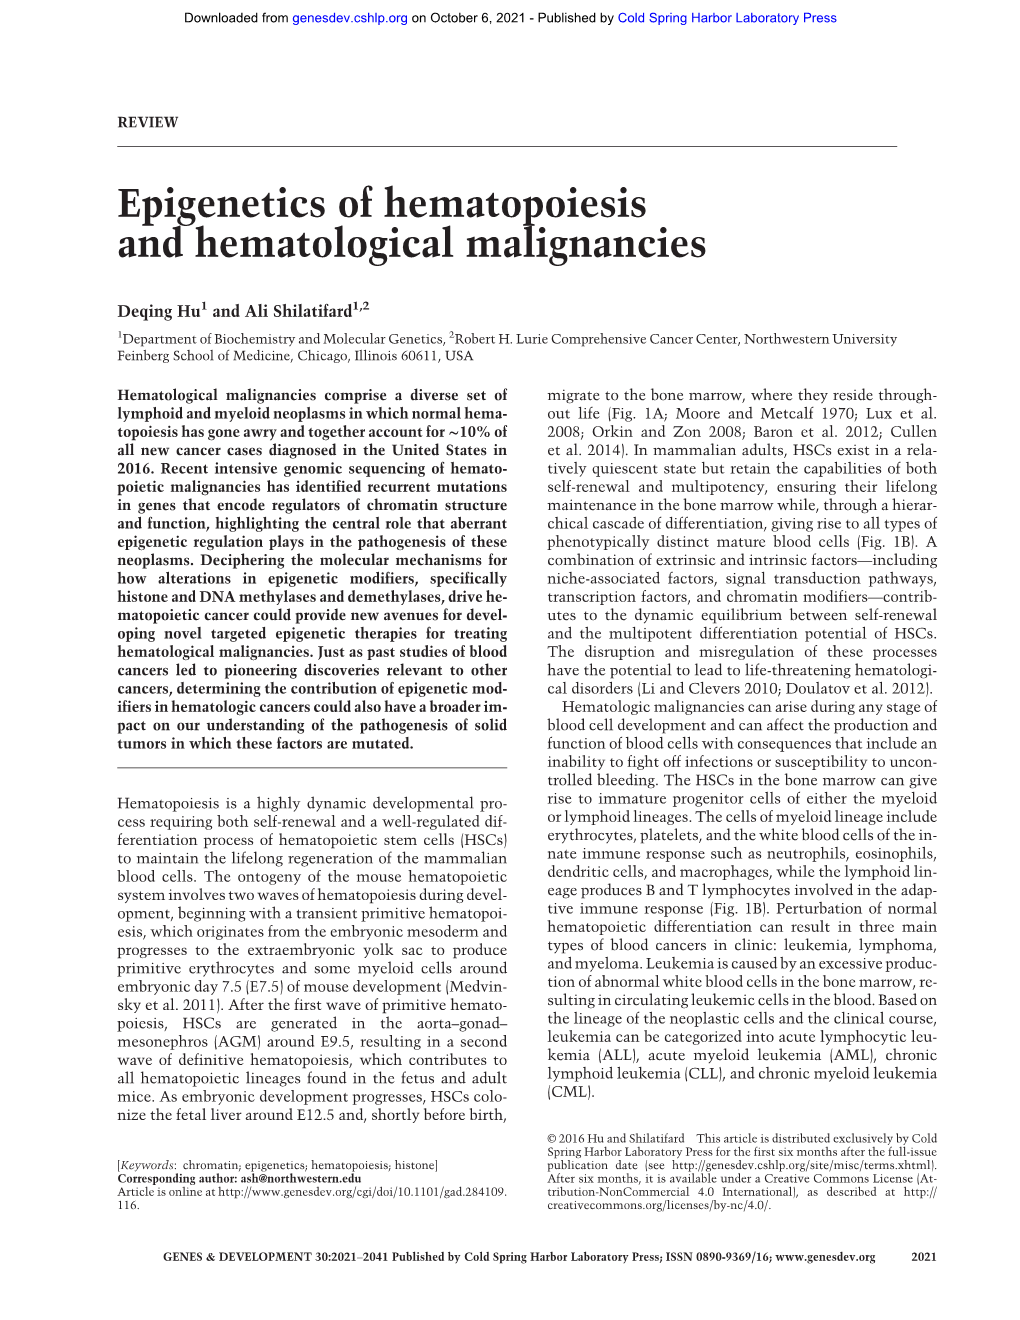 Epigenetics of Hematopoiesis and Hematological Malignancies